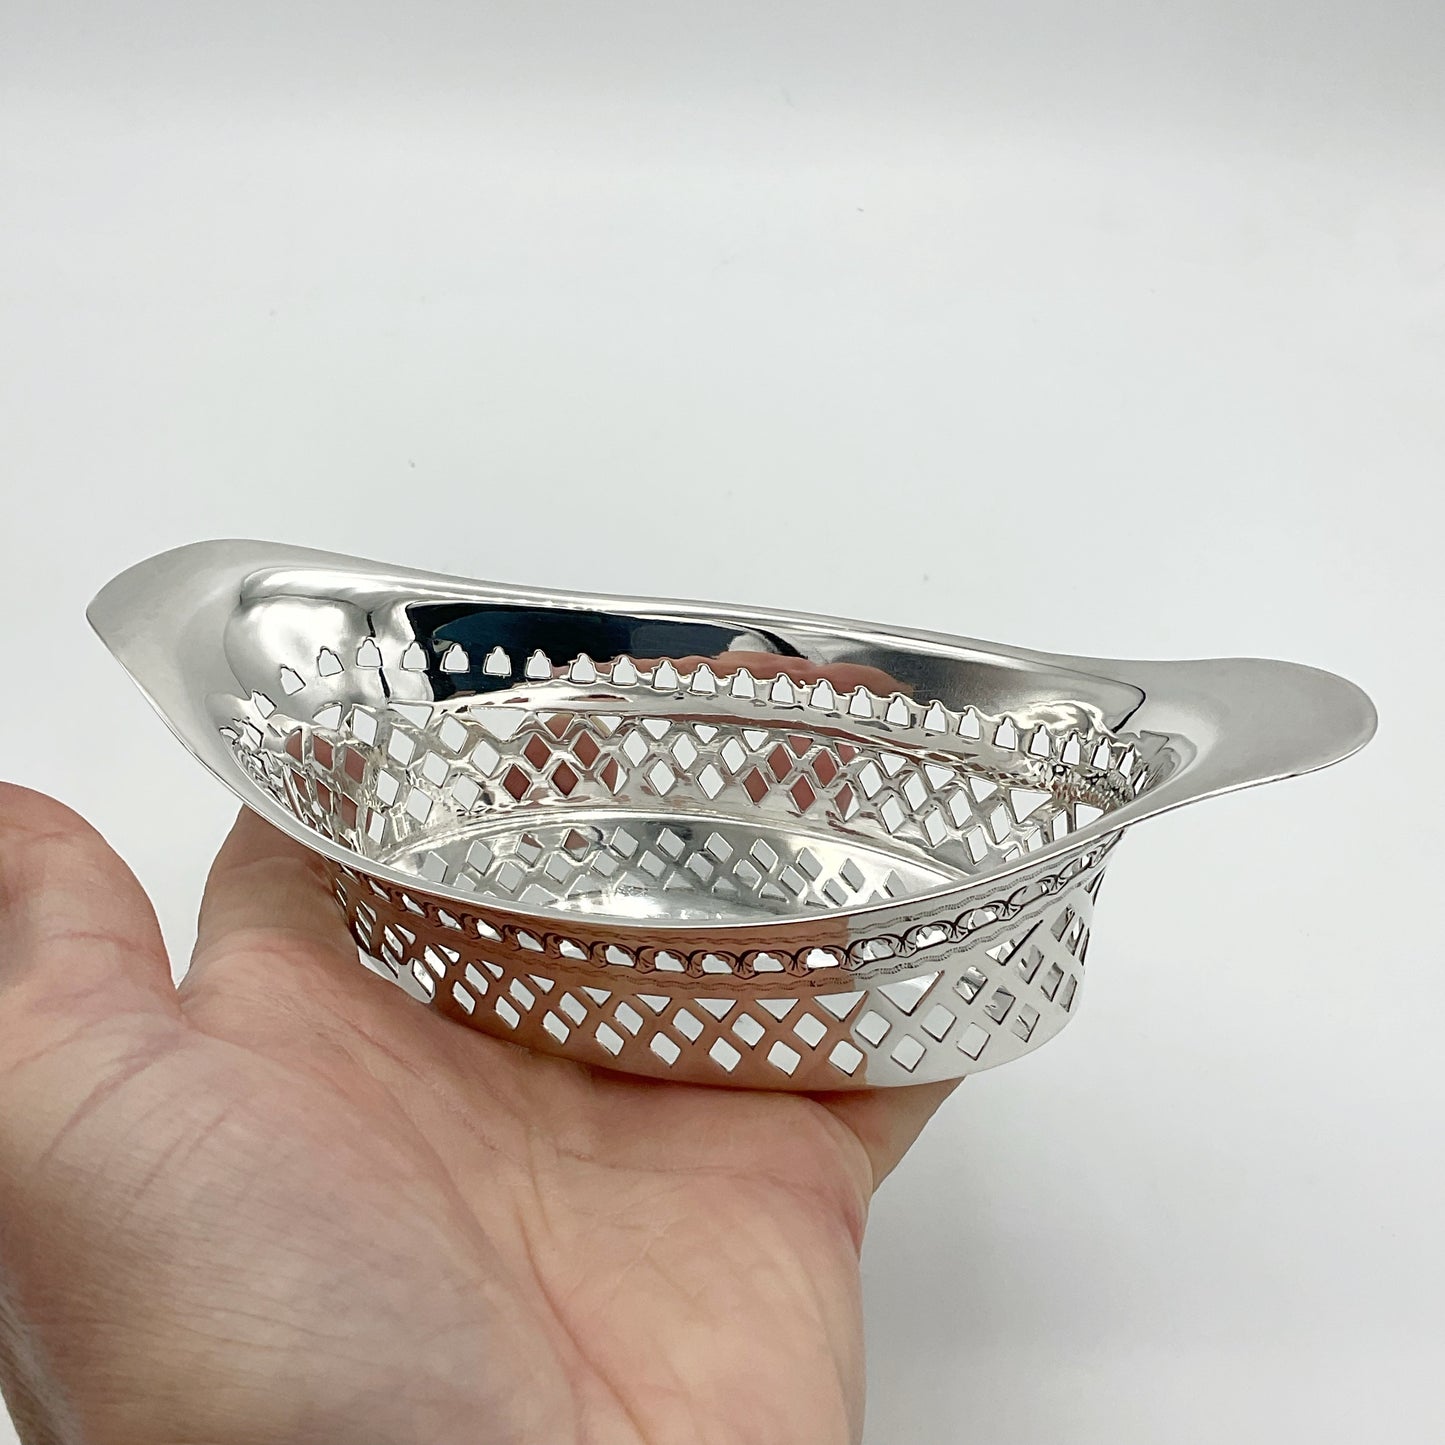 Shiny silver pierced bowl sitting on a hand